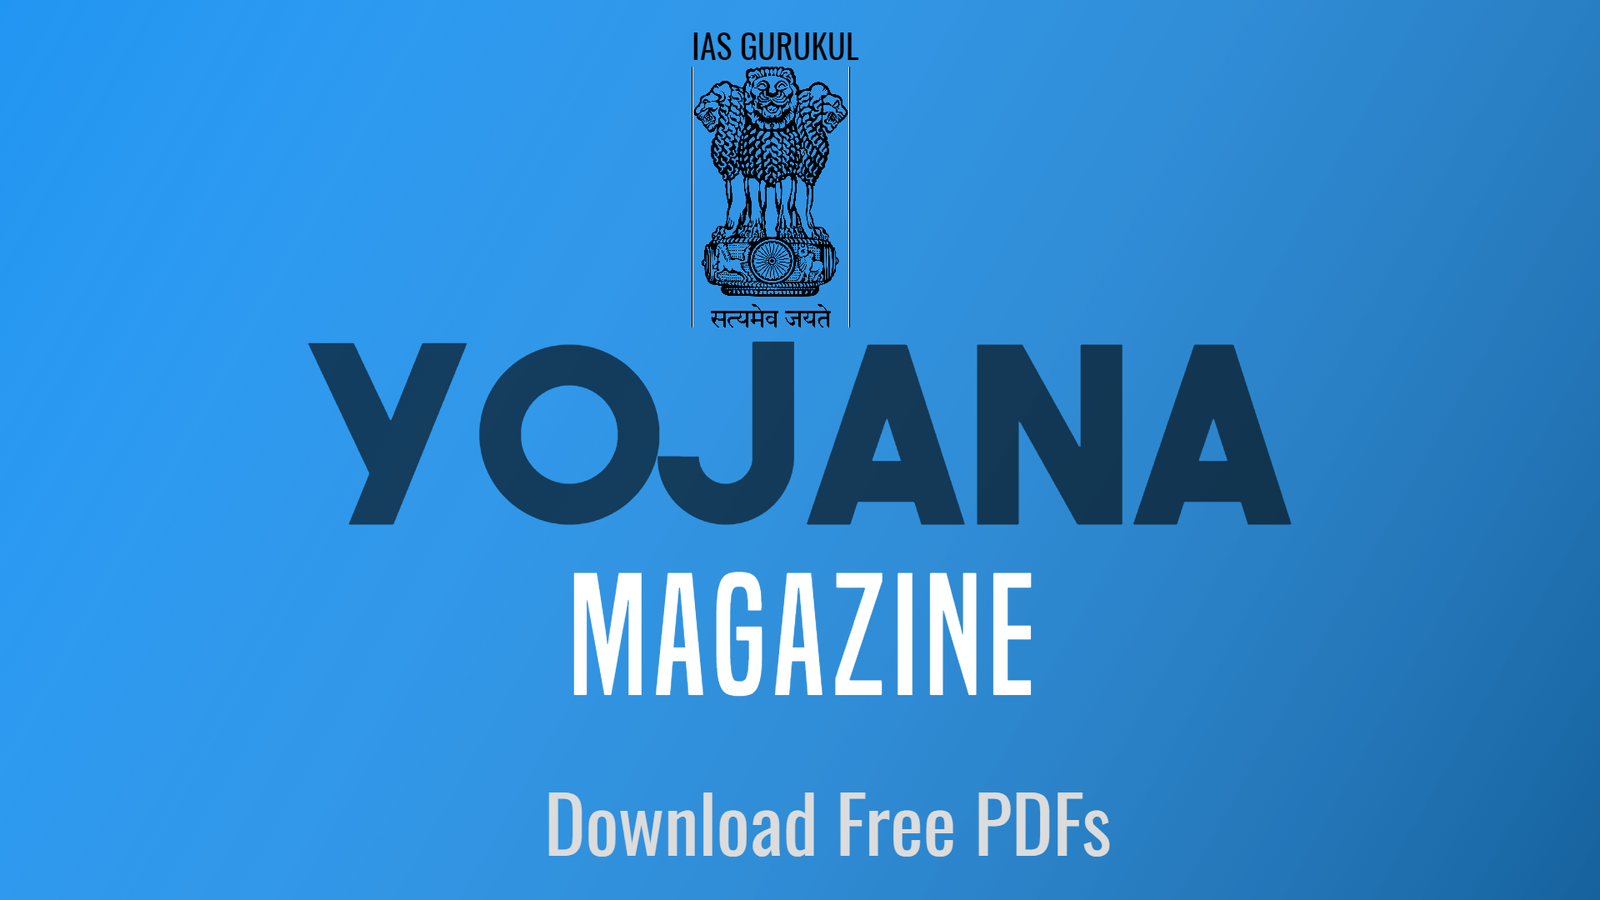  Yojana magazine pdf by iasgurukul